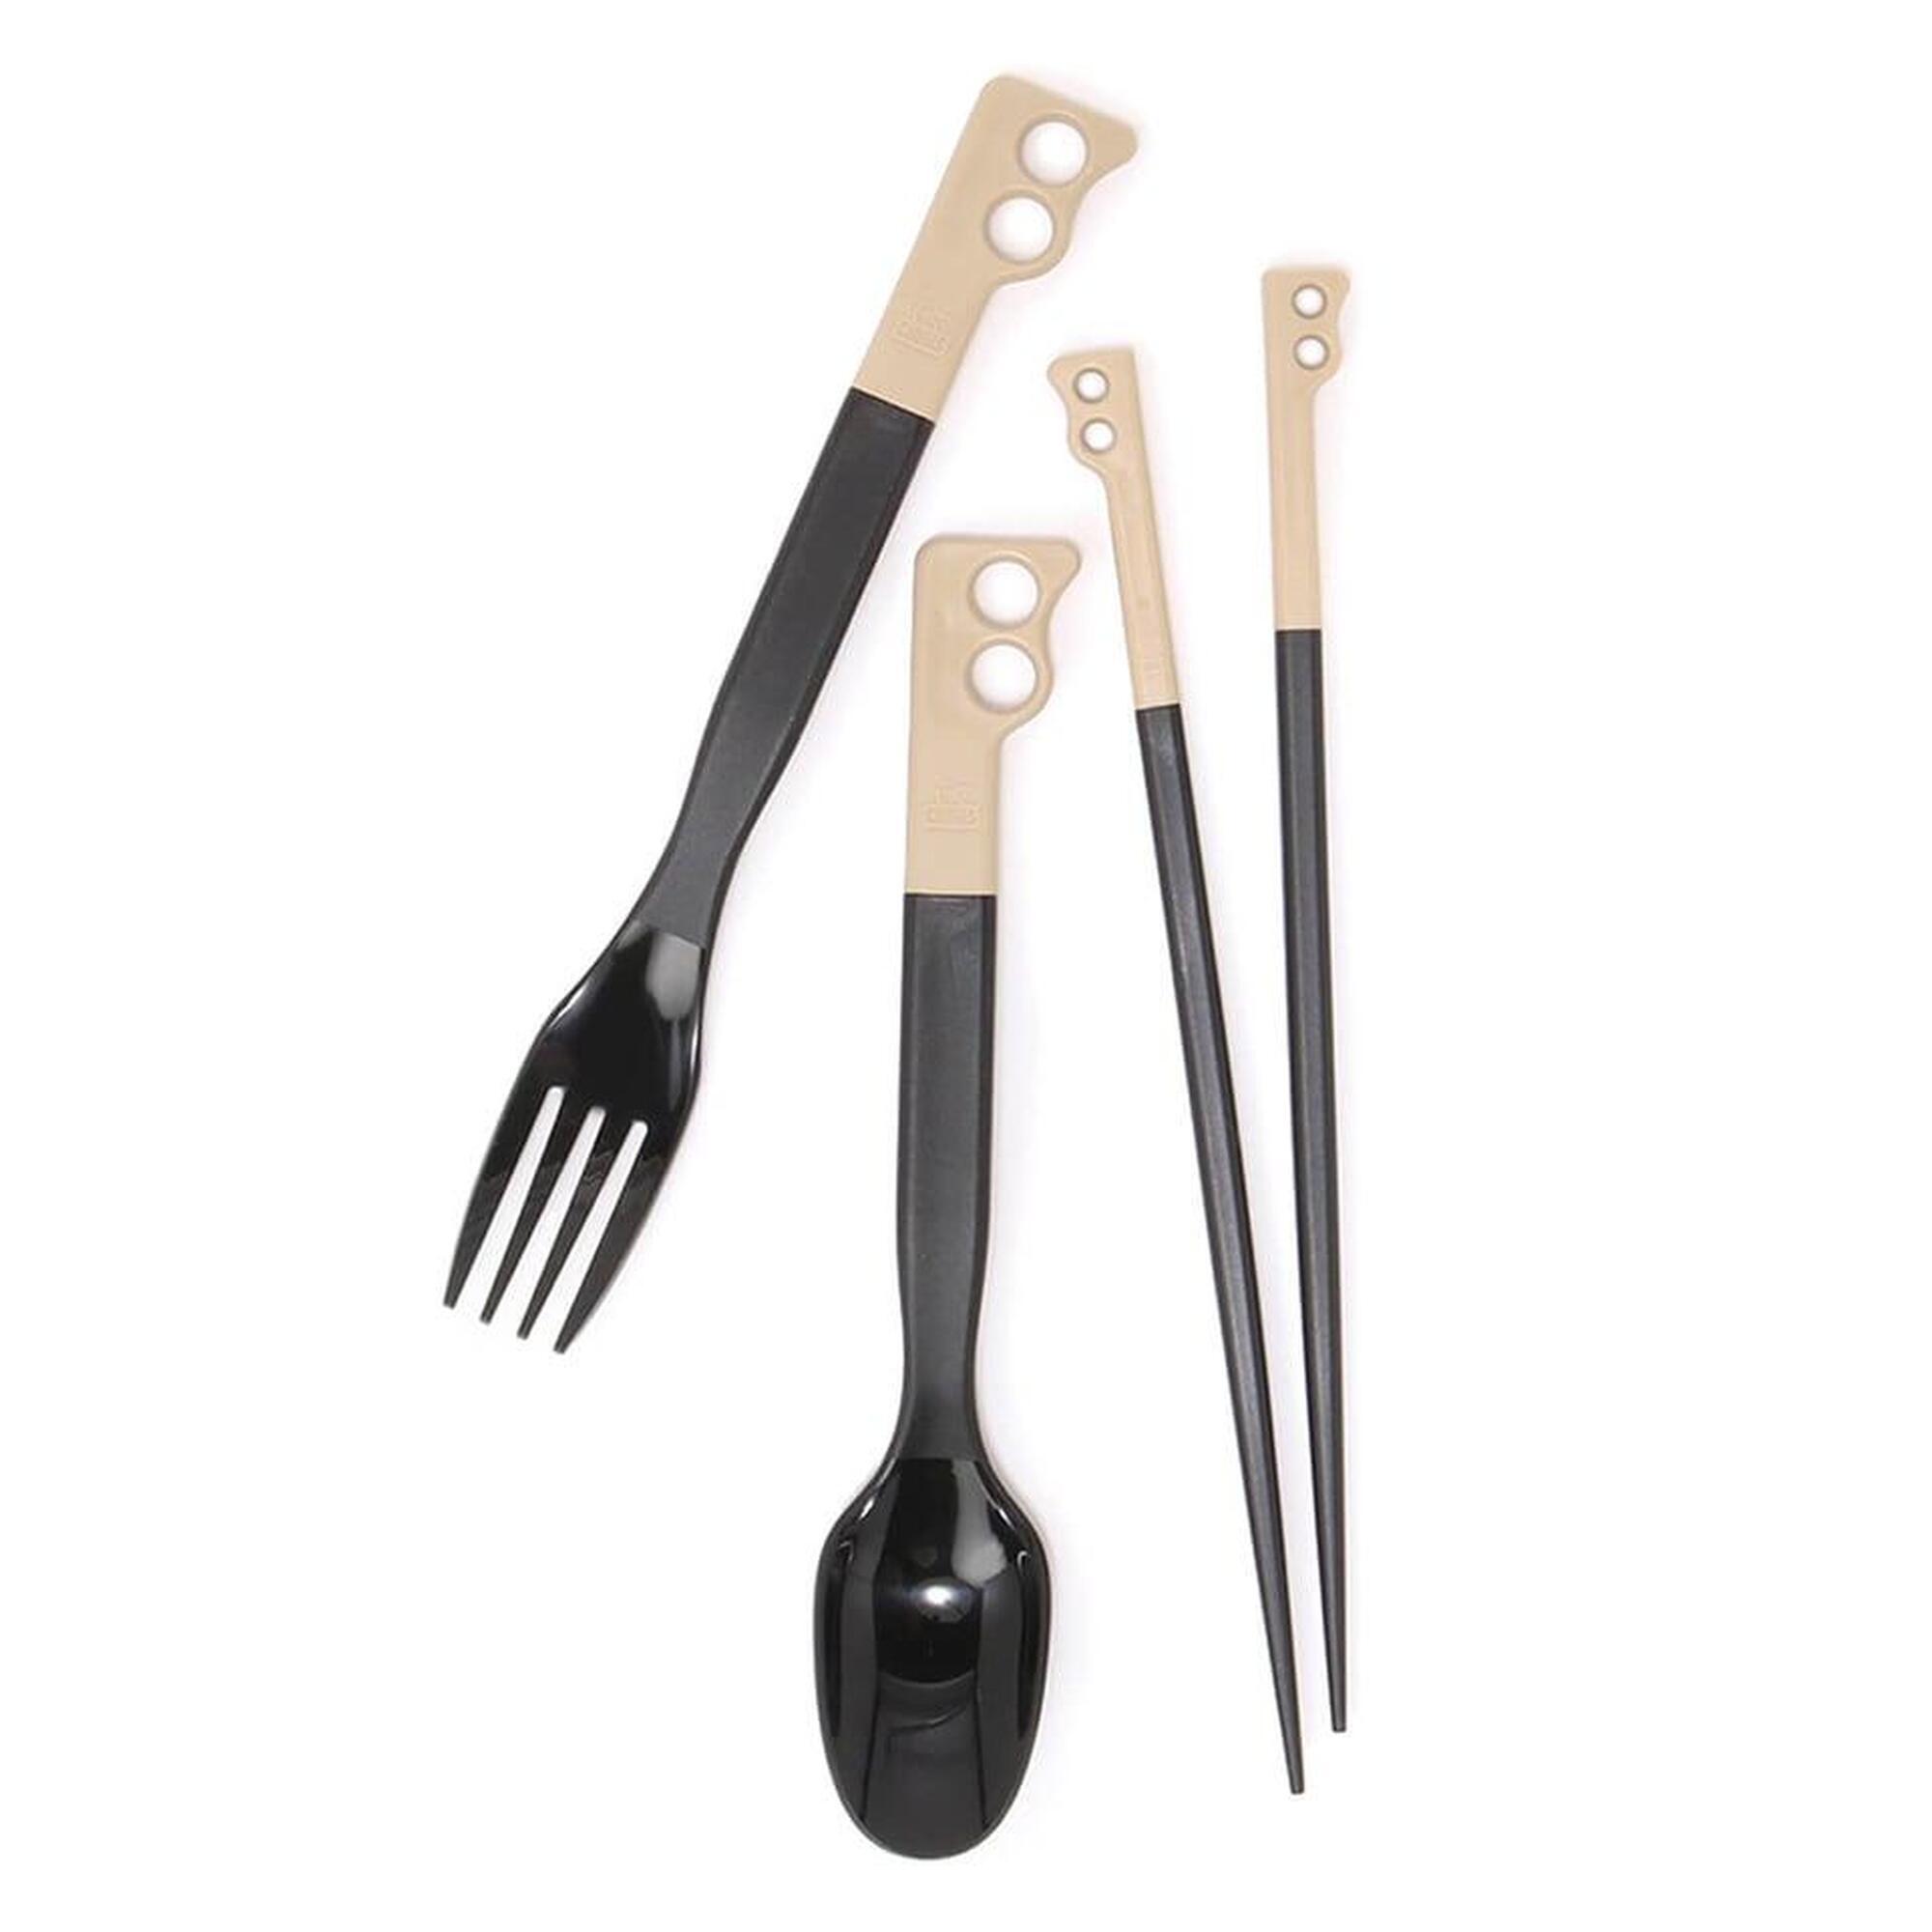 Camper Cutlery Set (3 pieces) - Black/Beige